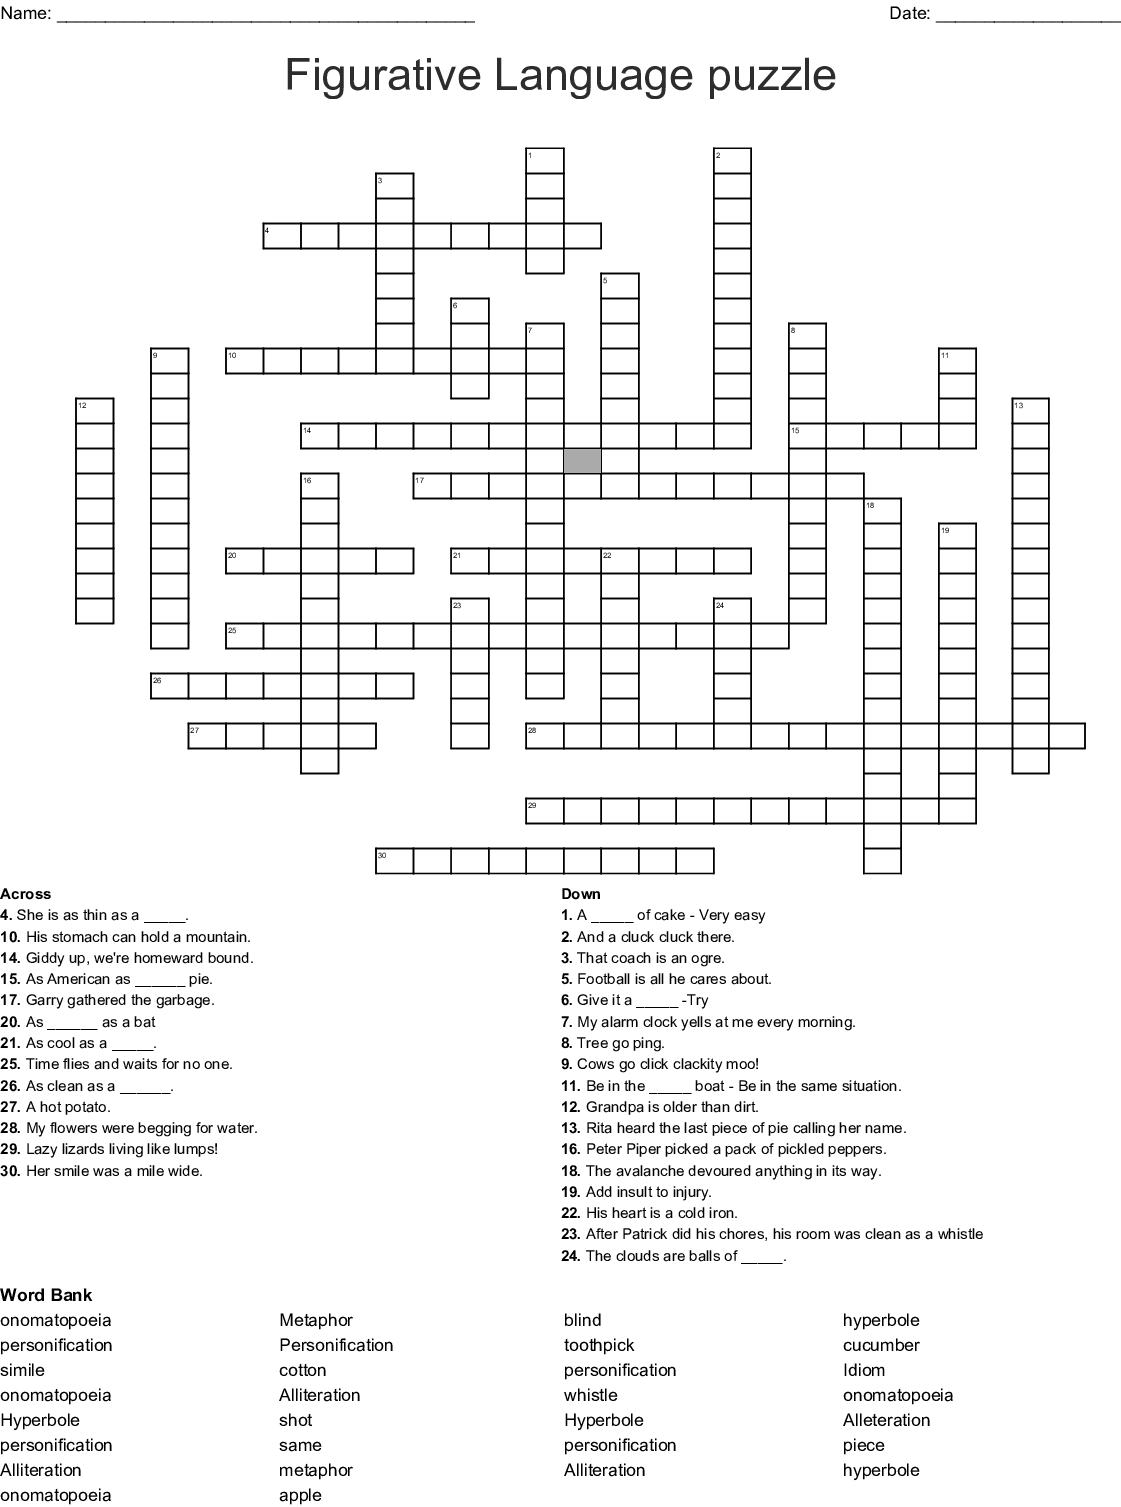 Free Printable Figurative Language Crossword Puzzle